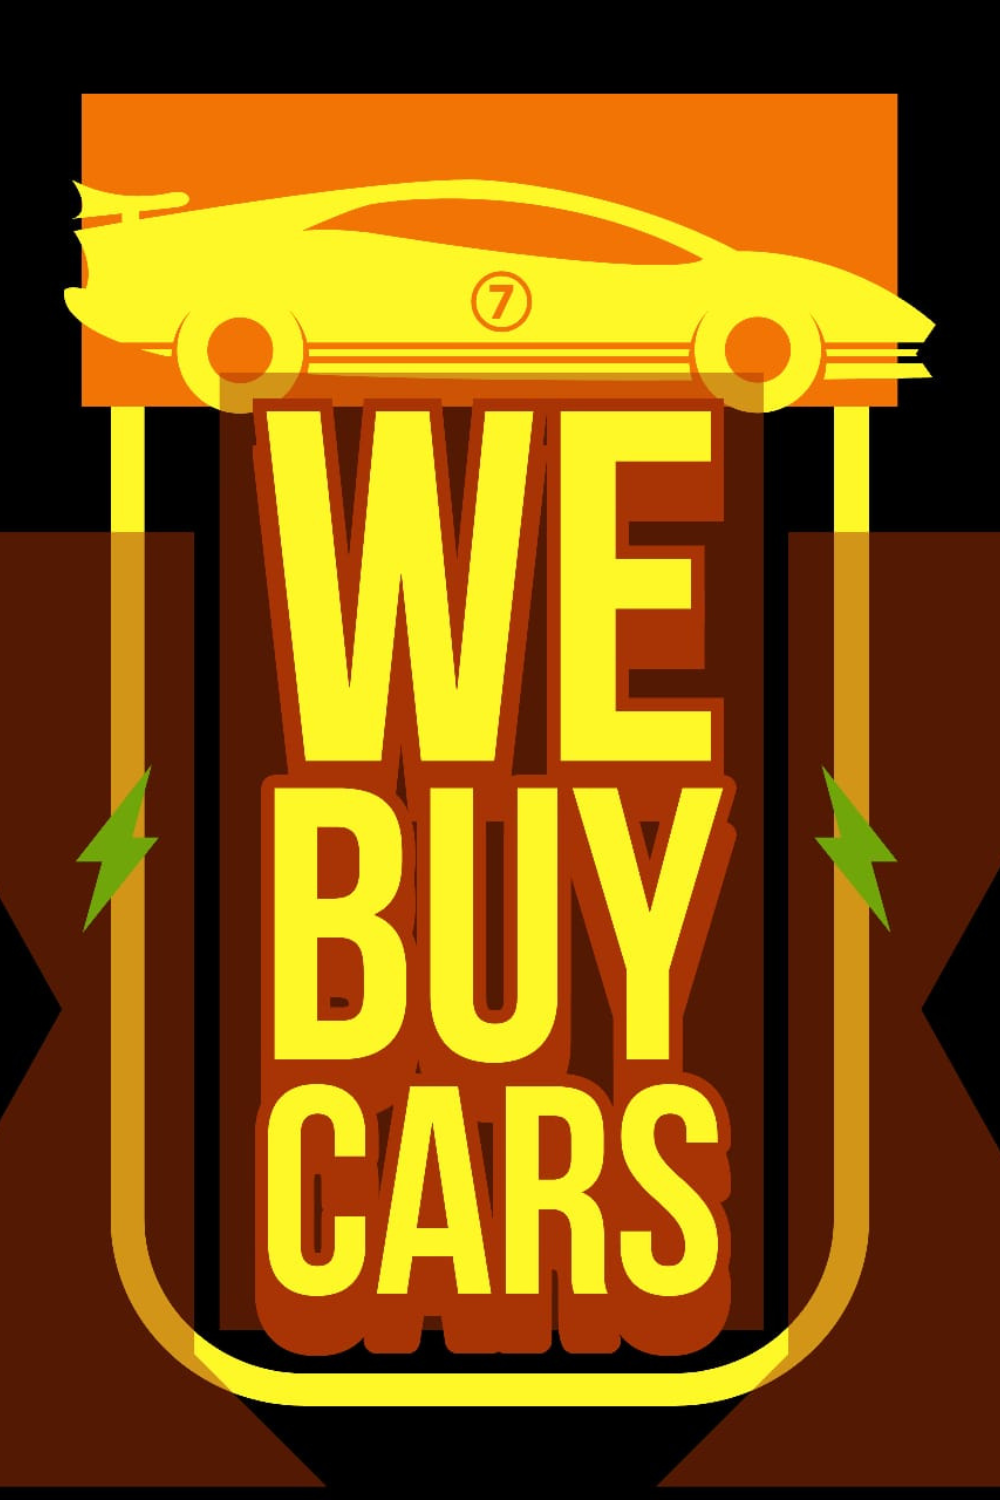 We Buy Cars Business Logos pinterest image.